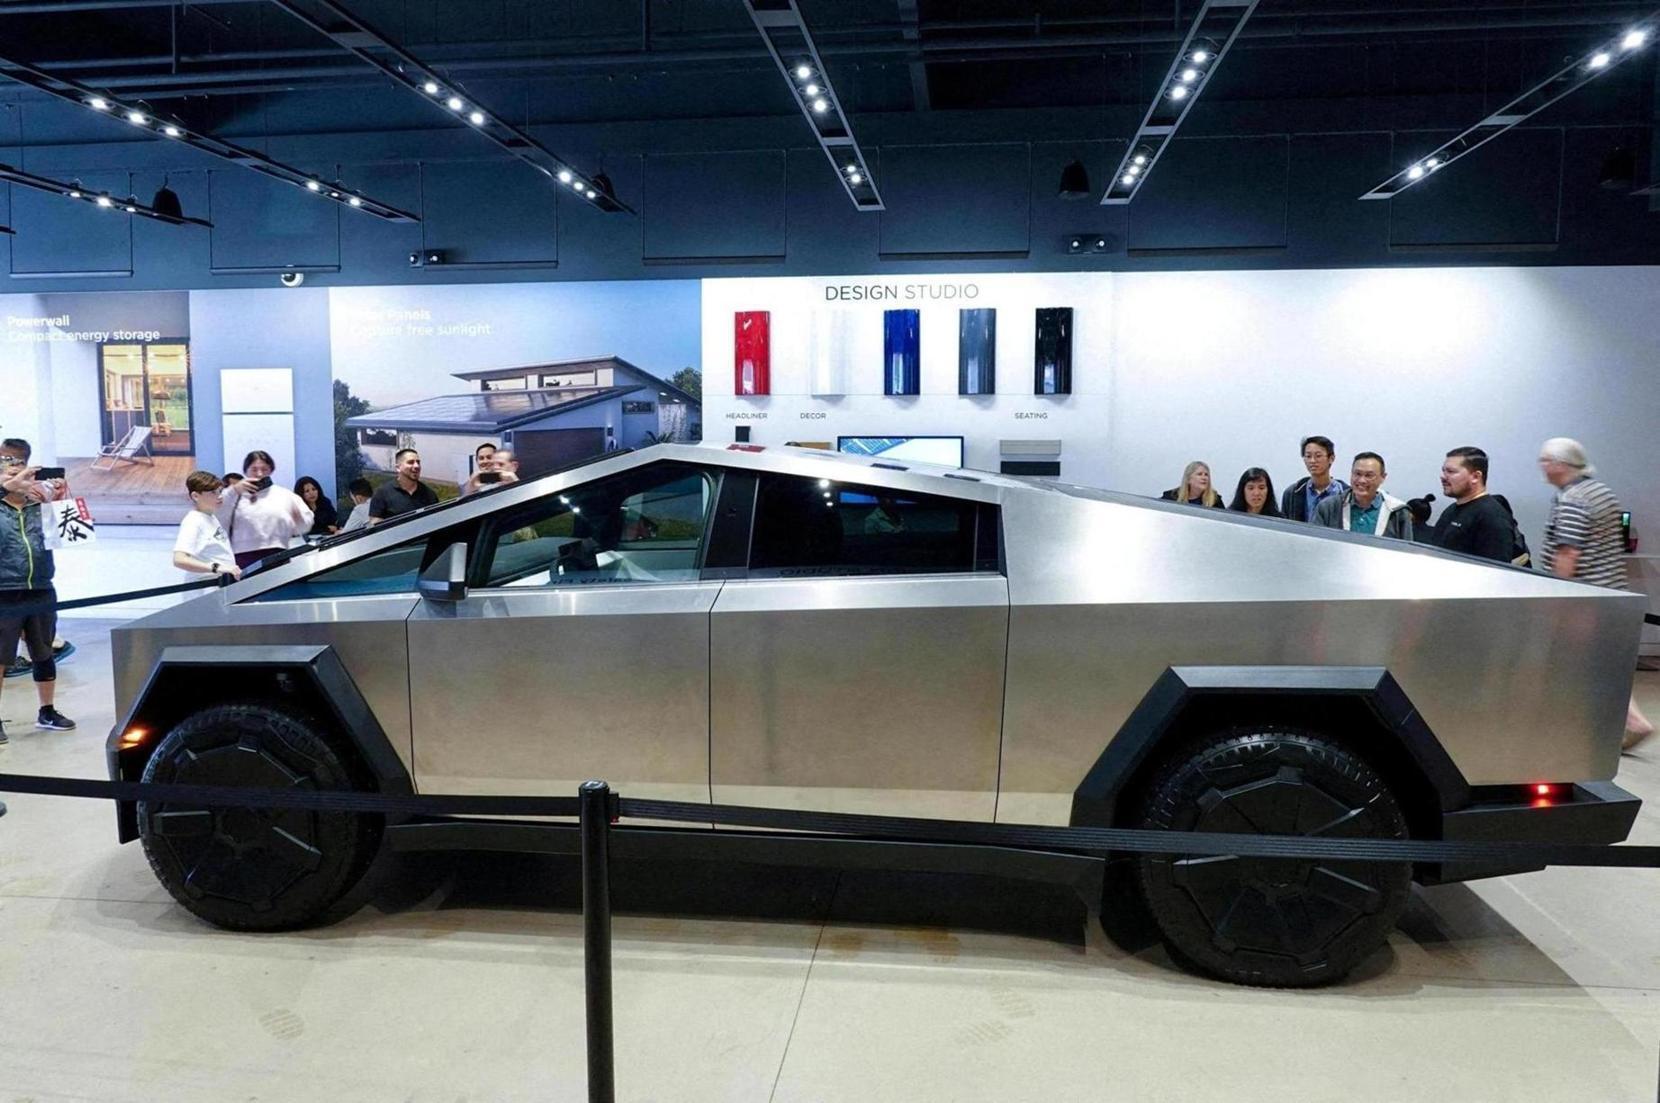 Tesla’s Cybertruck feels like an SUV; price, lower driving range upset some